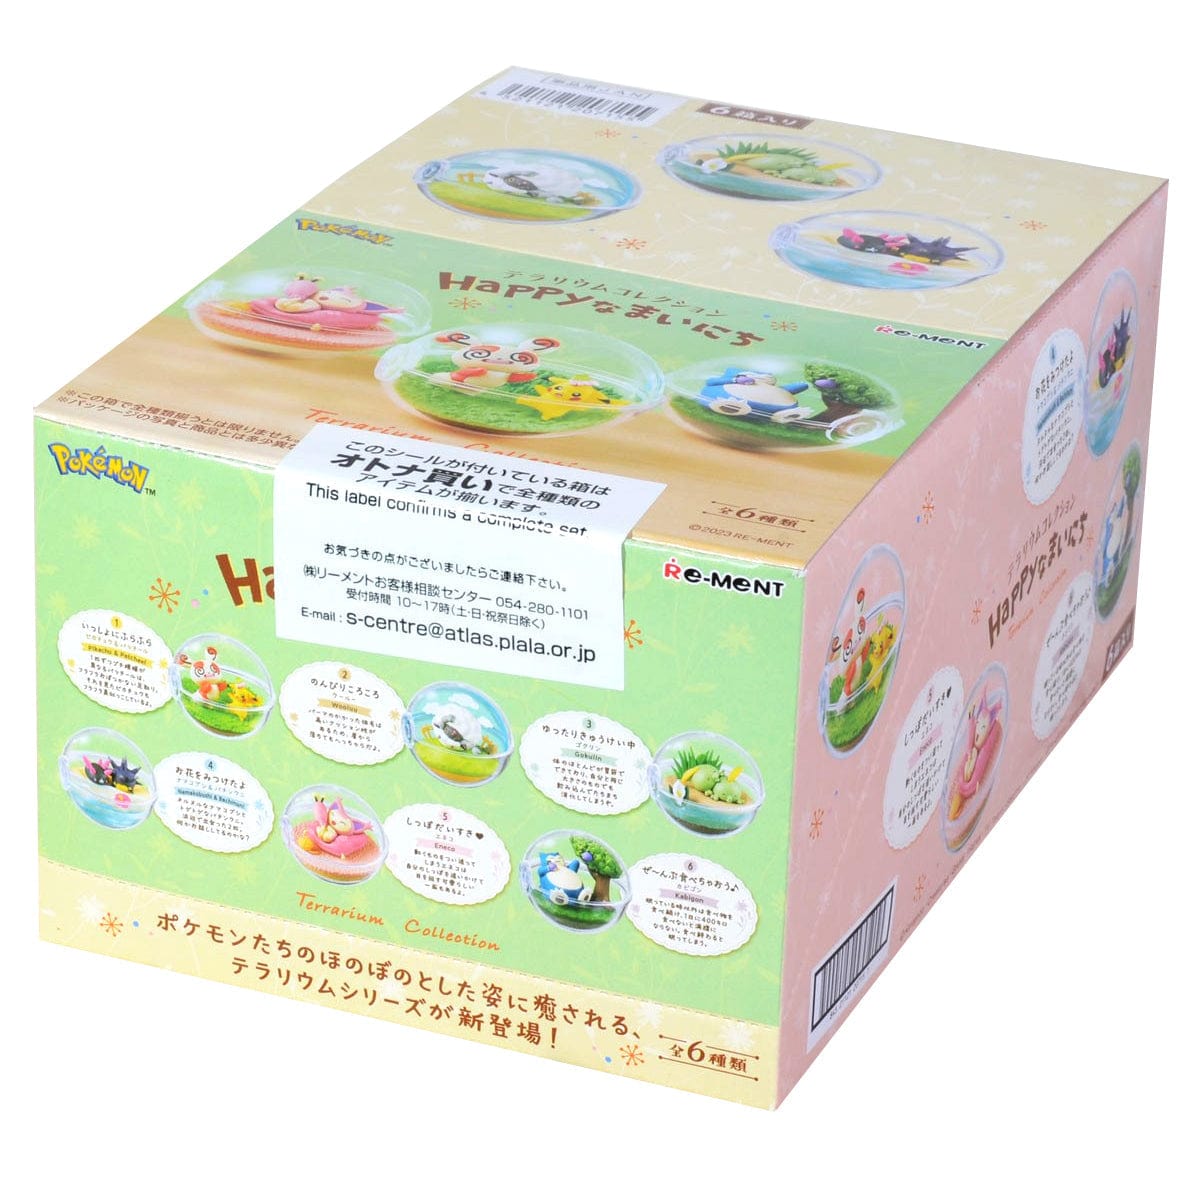 JBK Rement Pokemon Terrarium Collection Happy Days Surprise Box Kawaii Gifts 4521121207155